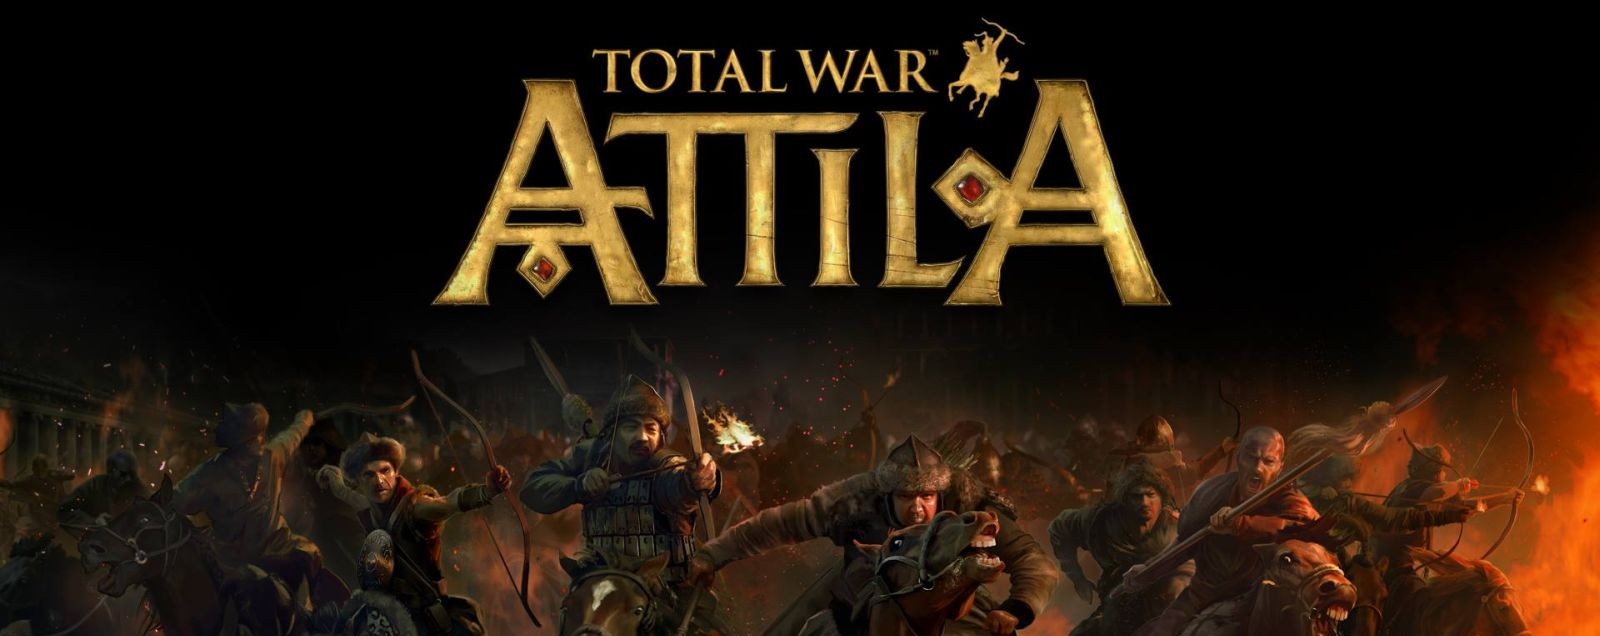 Total War Attila CdKey PC bester Preis